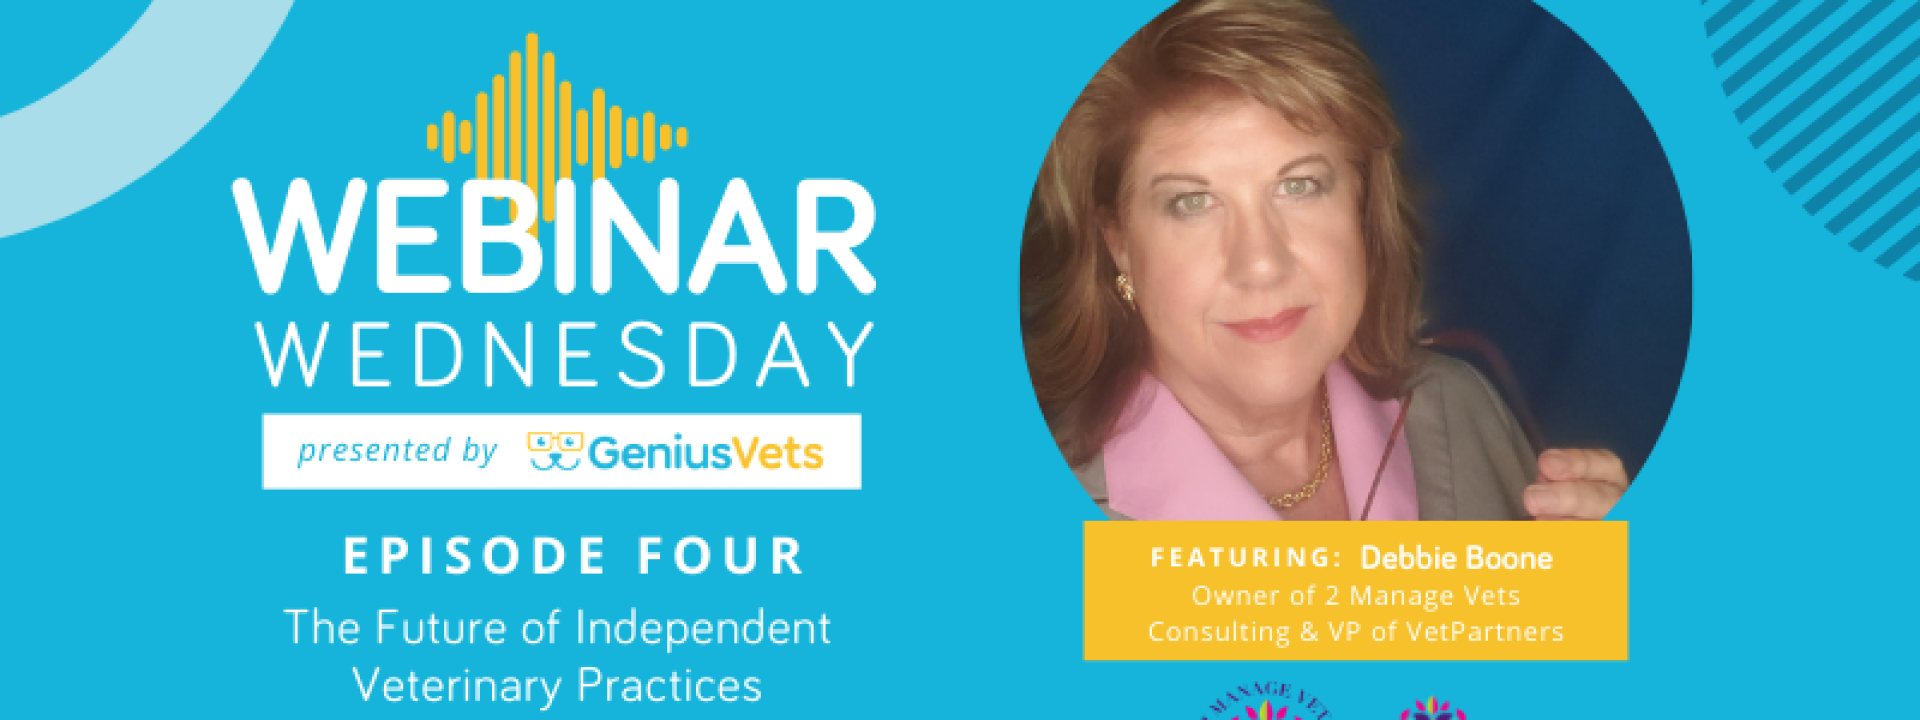 Webinar Wednesday With GeniusVets With Debbie Boone